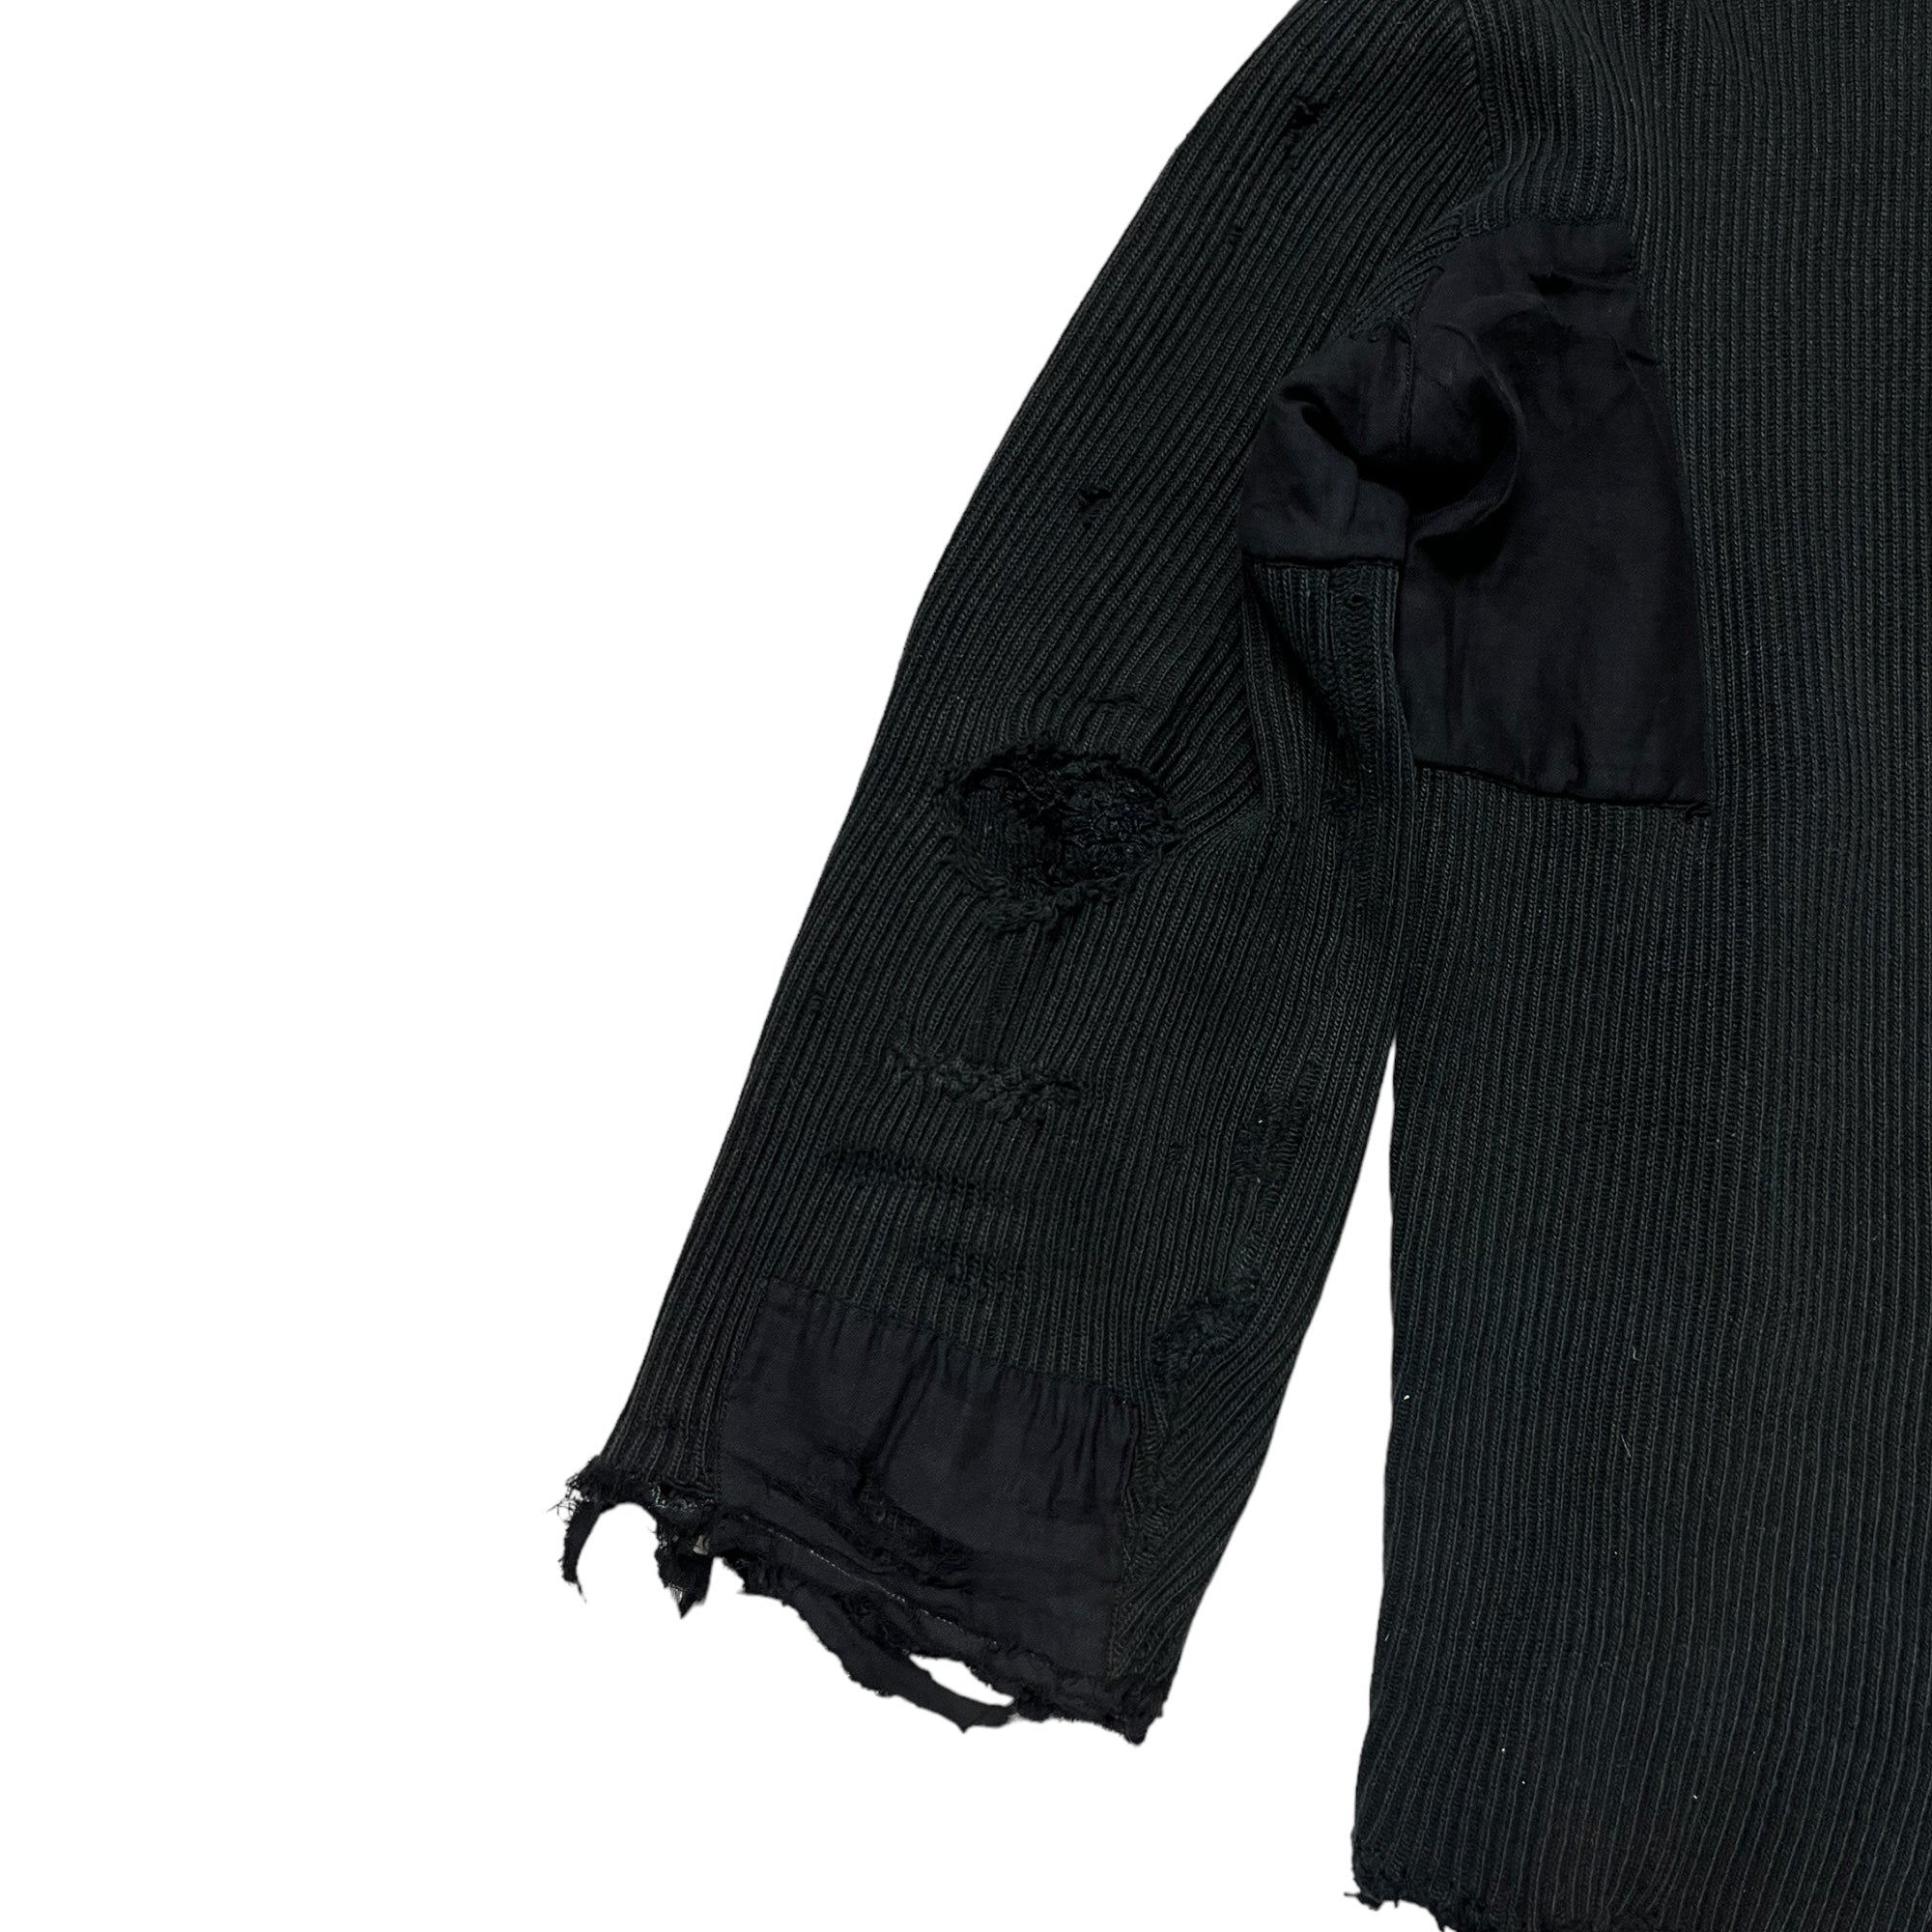 1930s Distressed German Work Knit Cardigan - Black - M